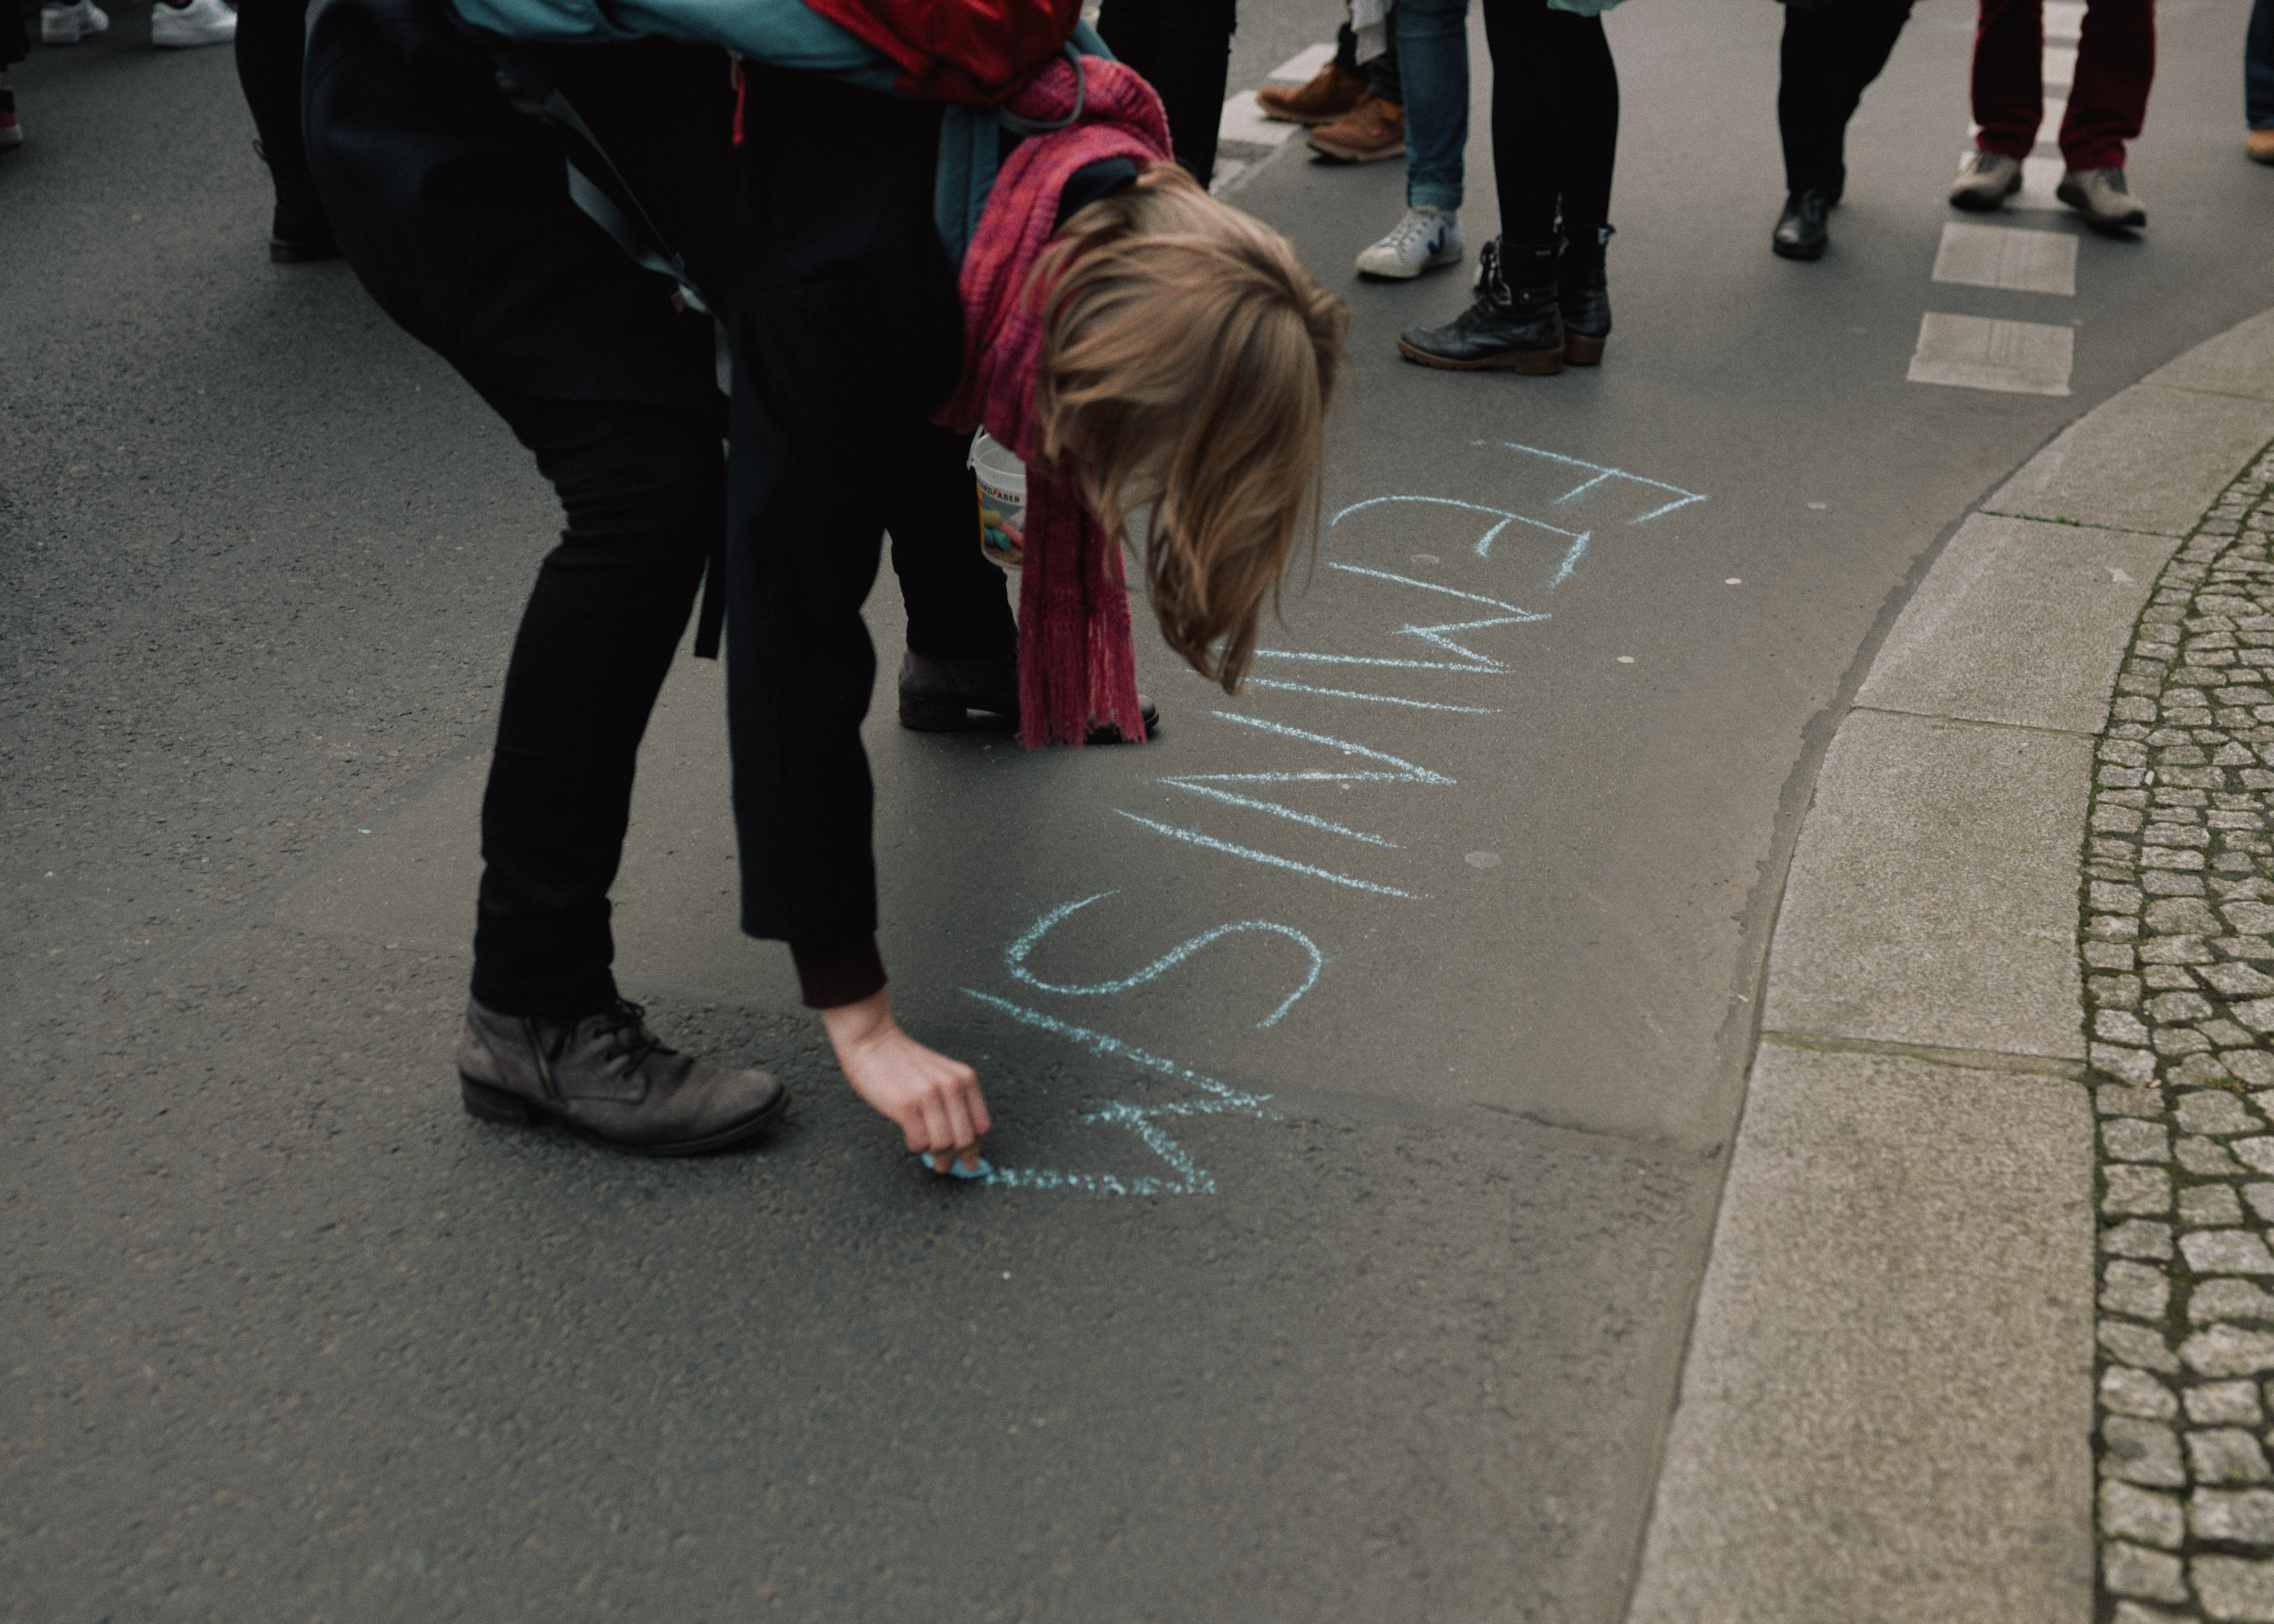 Protestor writes "FEMINISM" in chalk on the street